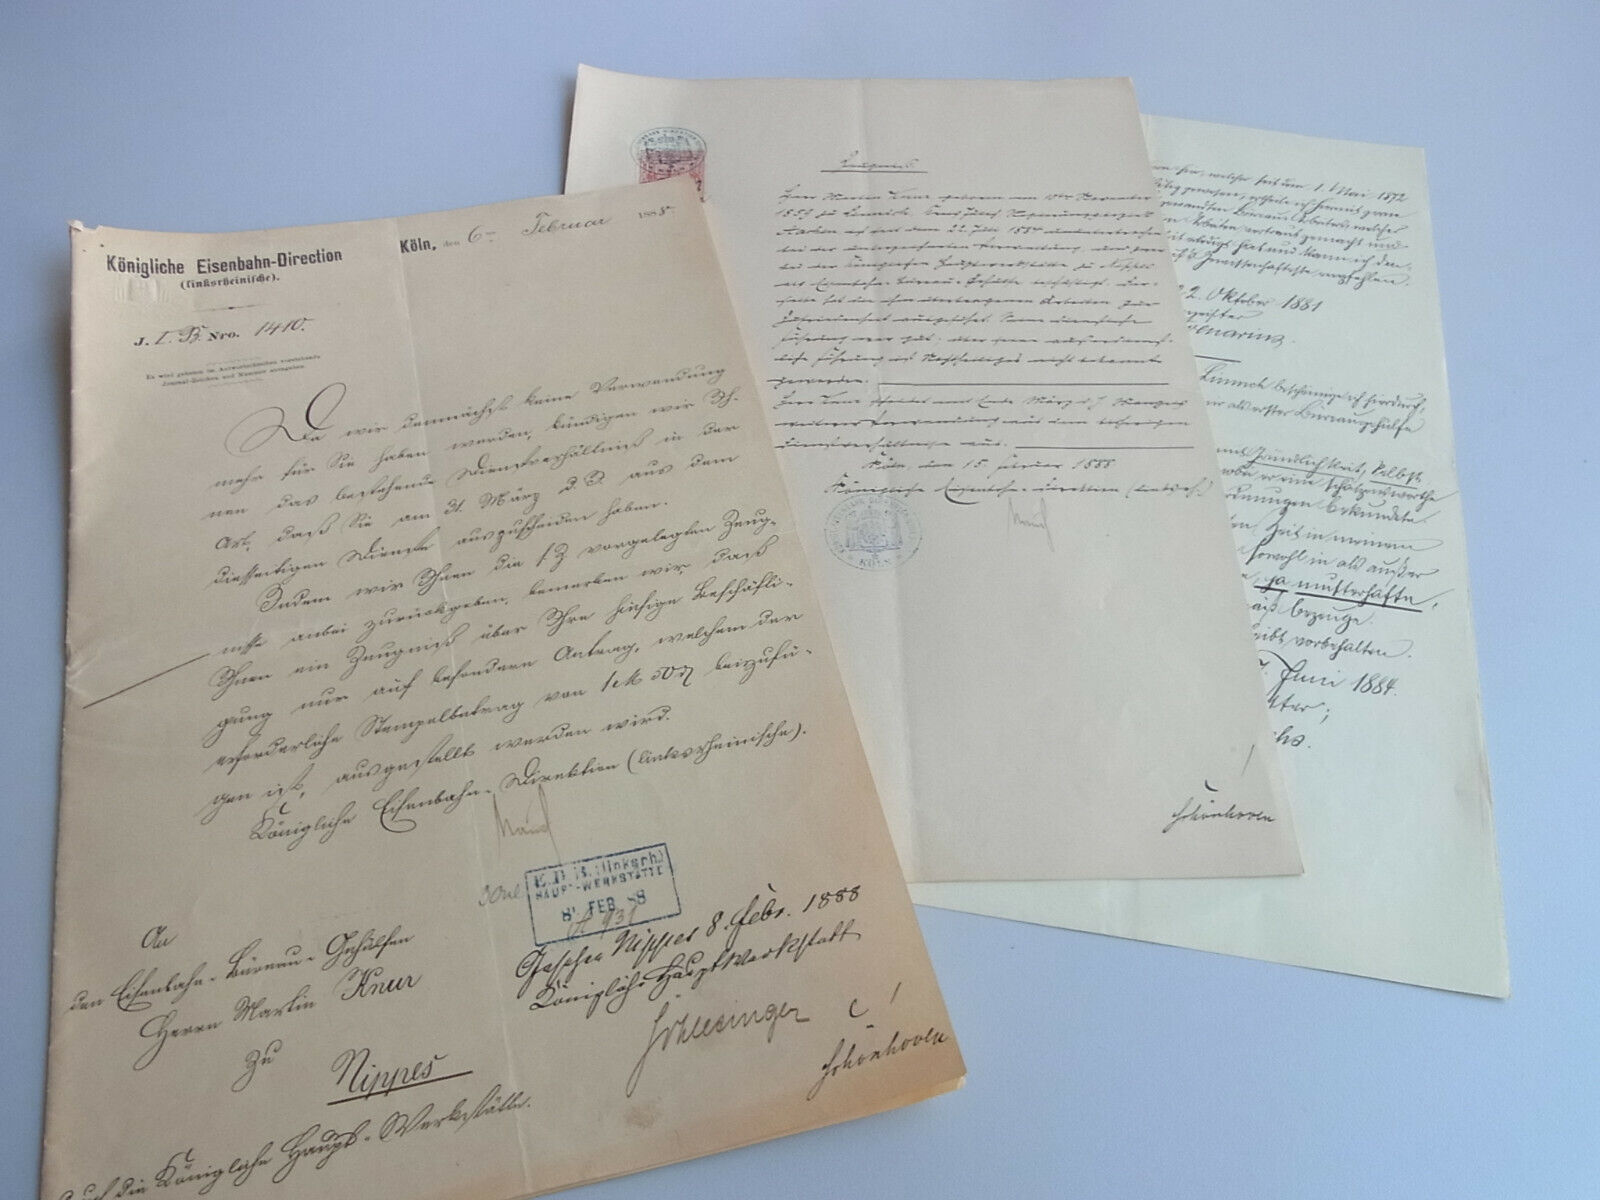 Eisenbahn-Direktion Cologne (Linksrheinisch) 1888: Termination & Certificate for